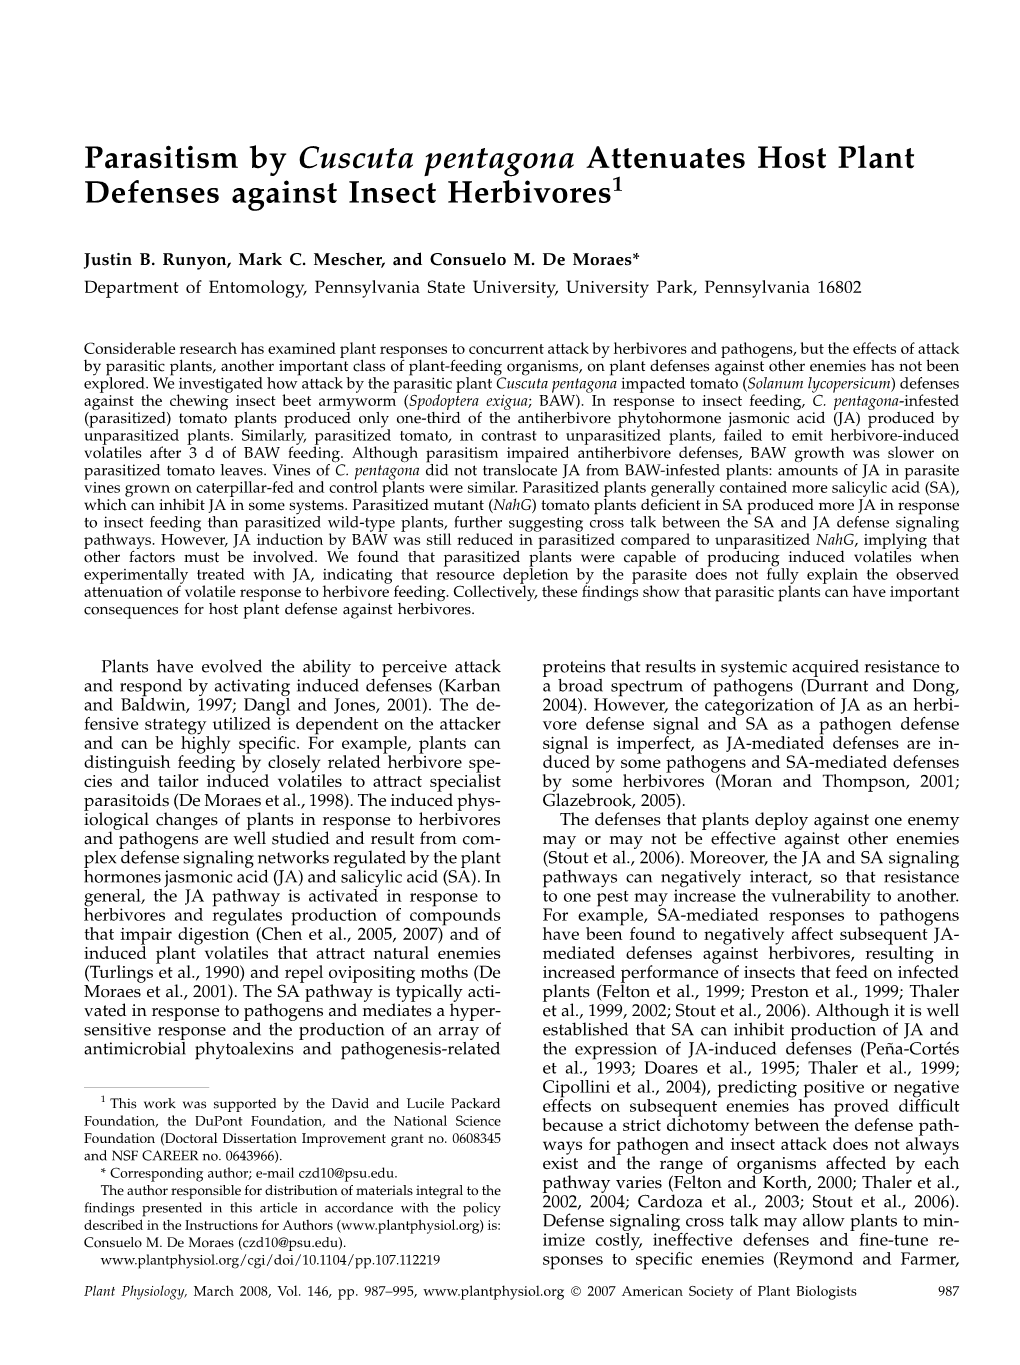 Parasitism by Cuscuta Pentagona Attenuates Host Plant Defenses Against Insect Herbivores1